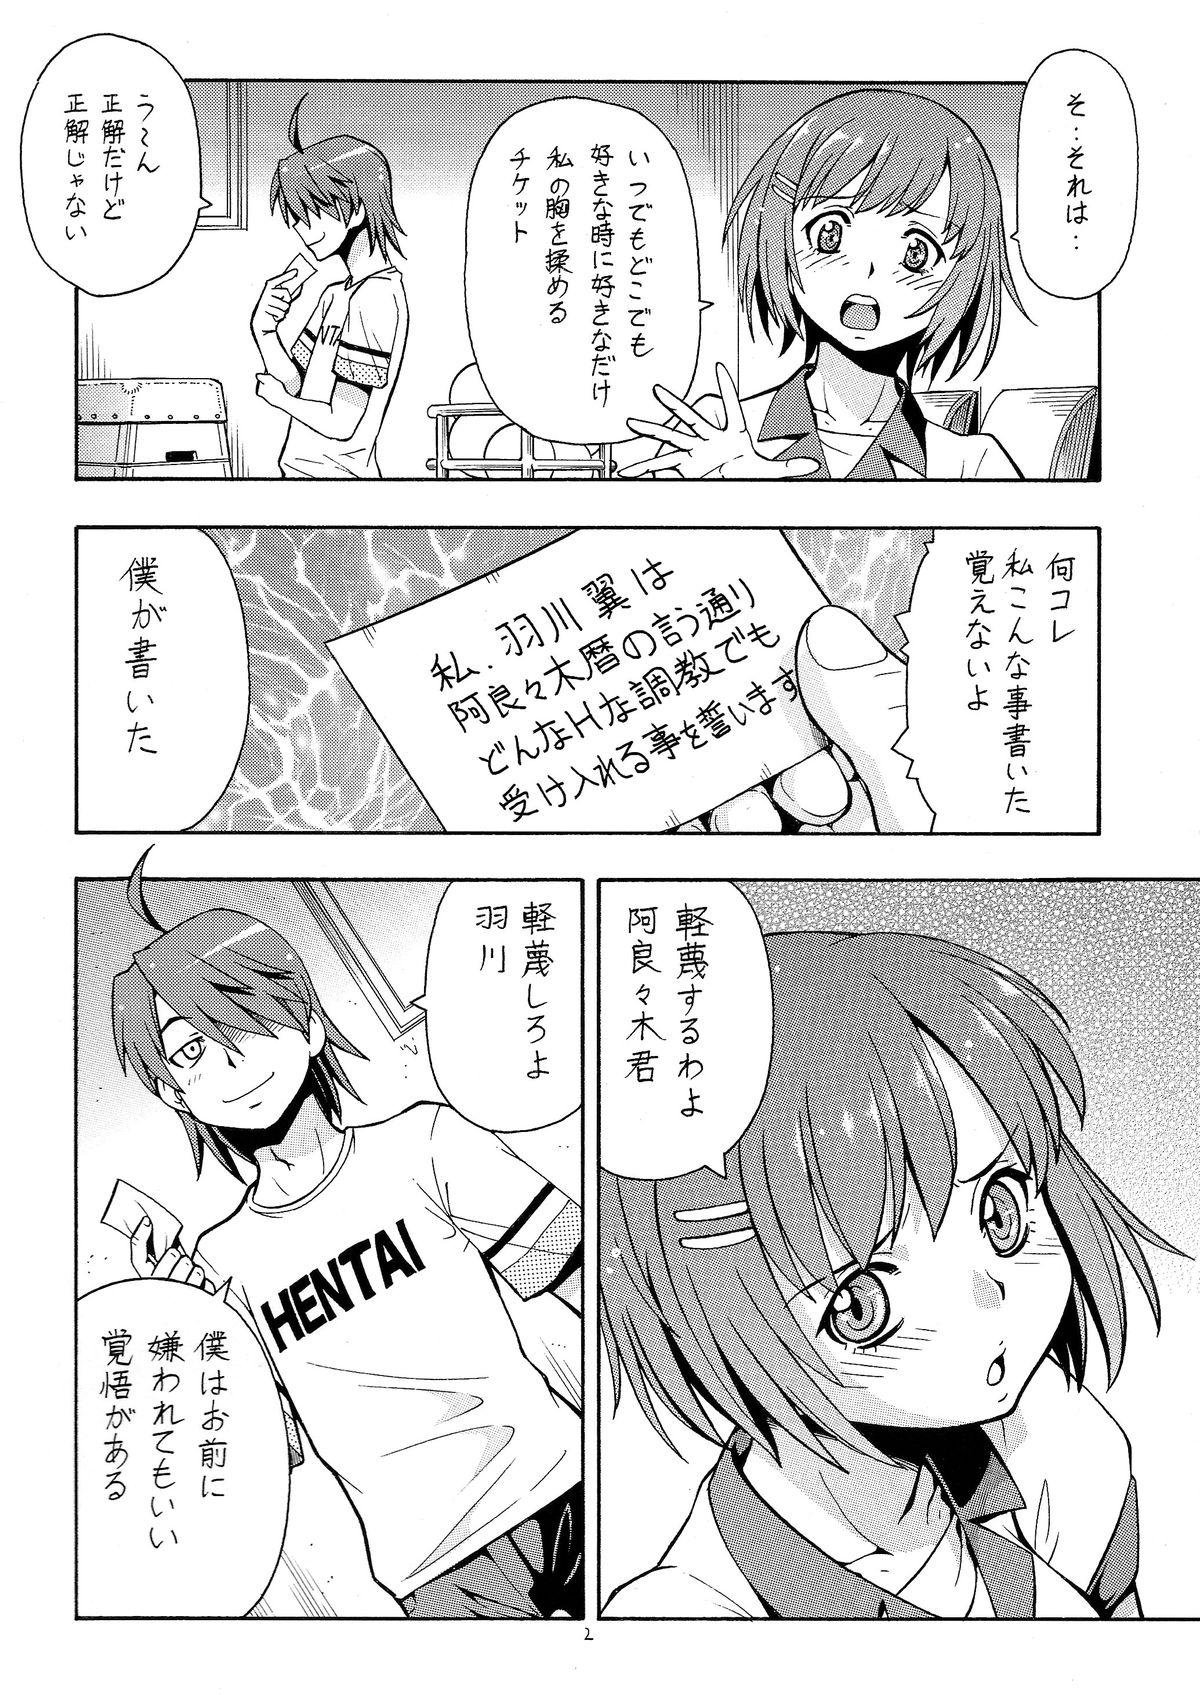 Slave Hito ni Hakanai to Kaite "Araragi" to Yomu 7 - Bakemonogatari Highheels - Page 4